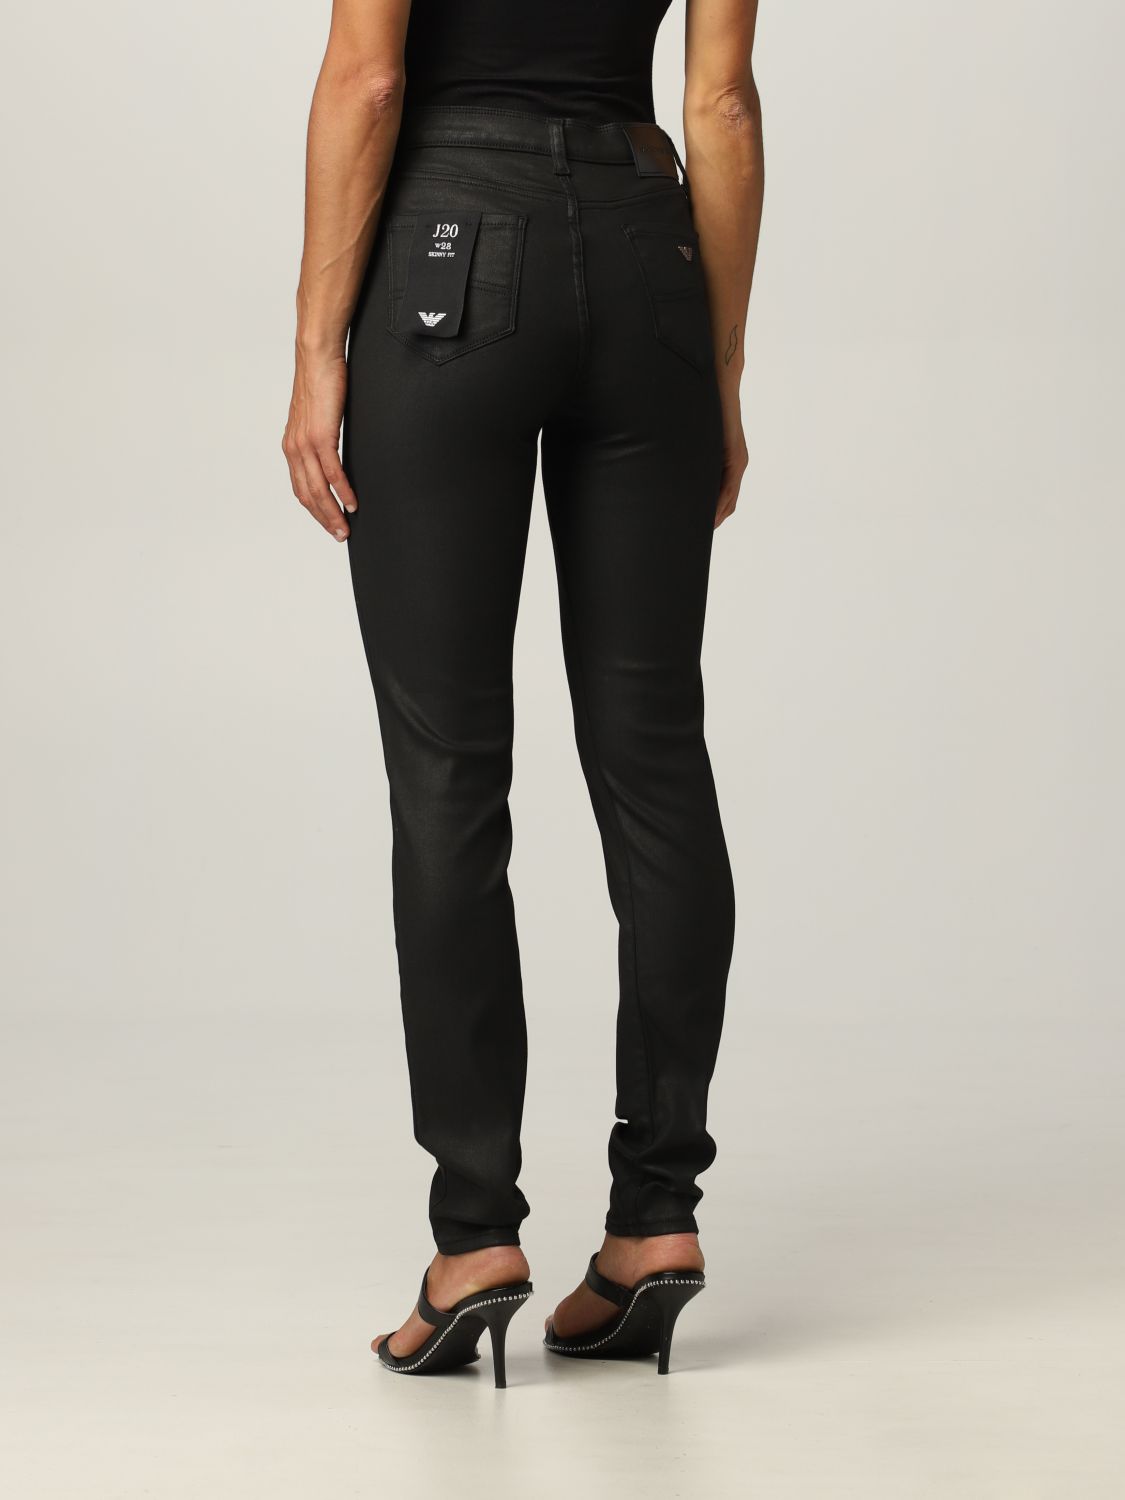 EMPORIO ARMANI: jeans leather-effect stretch denim with logo - Black | Armani 6K2J20 2N9IZ online on